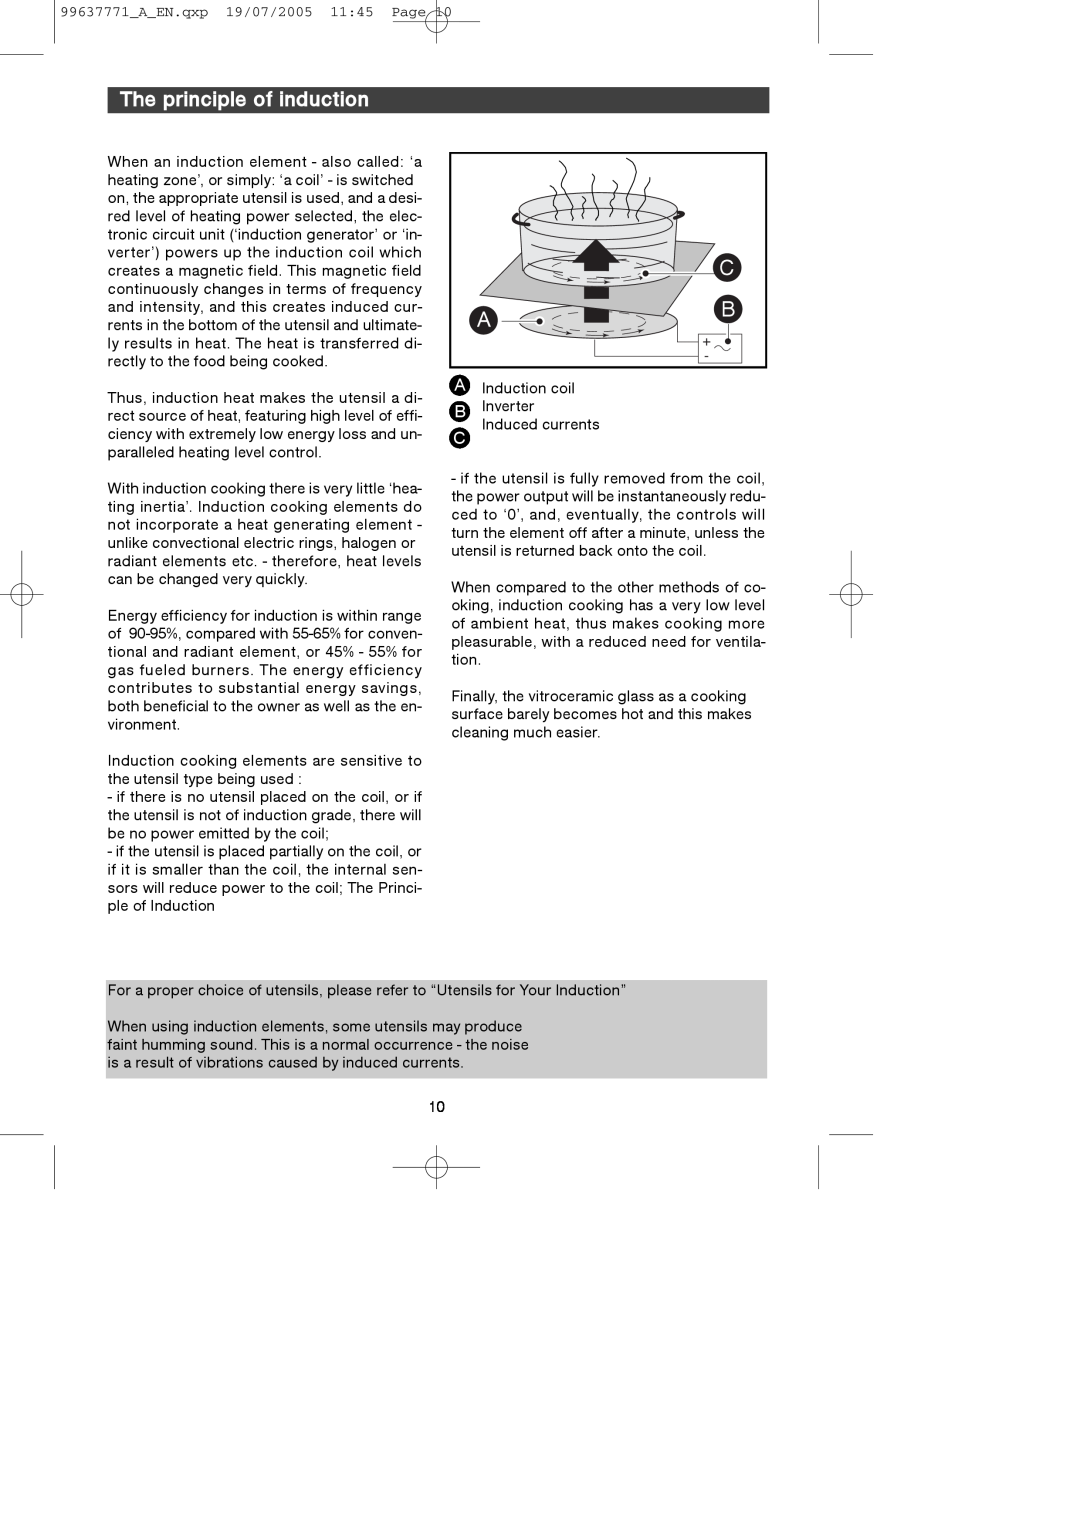 Kuppersbusch USA EKI956UL manual The principle of induction 